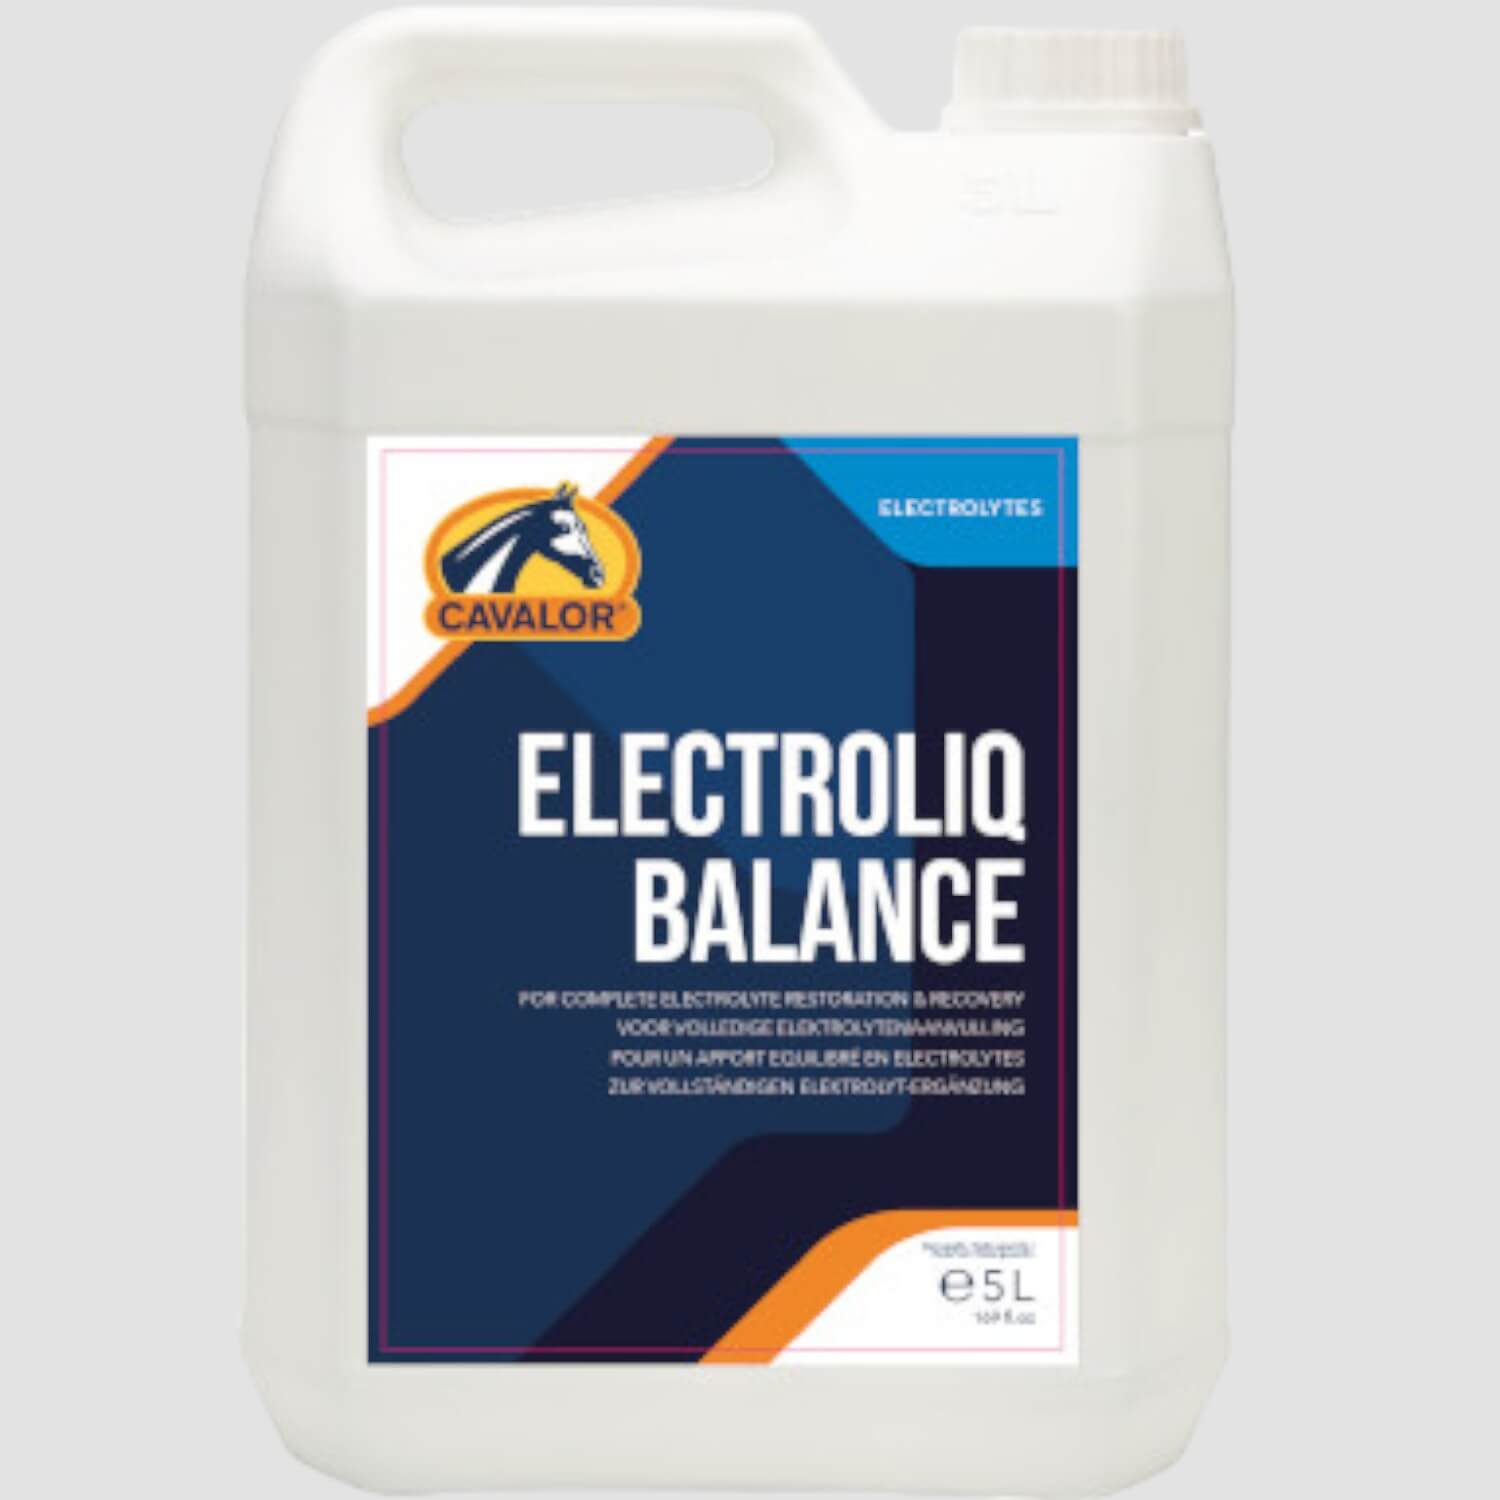 Cavalor Electroliq Balance 1000 ml